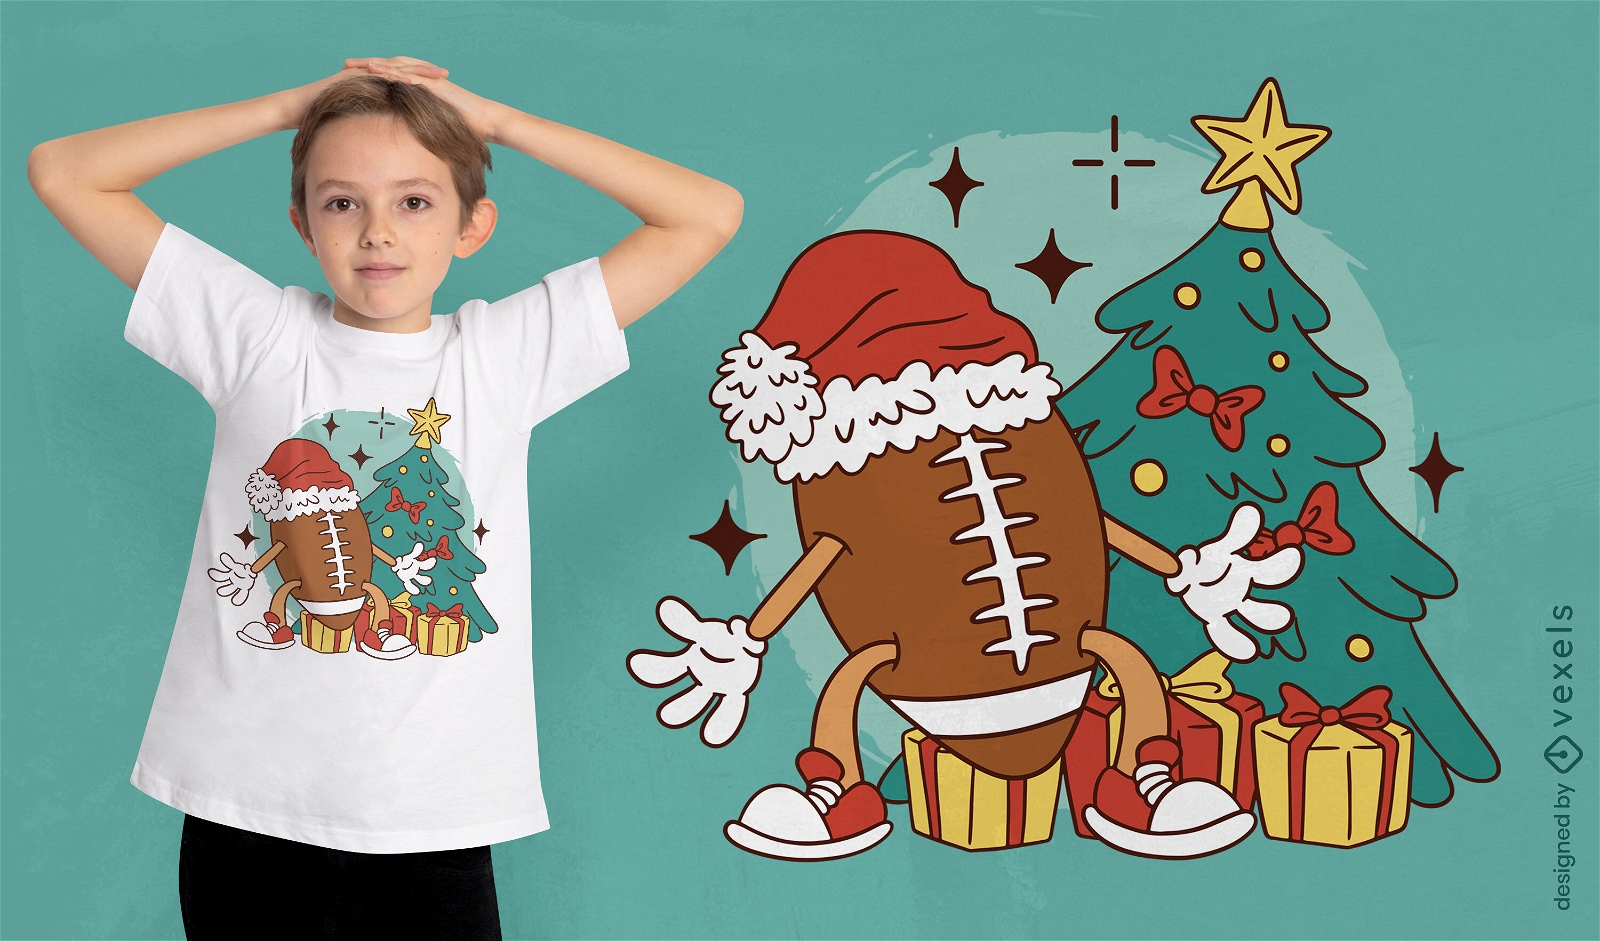 Weihnachtsfu?ball-T-Shirt-Design